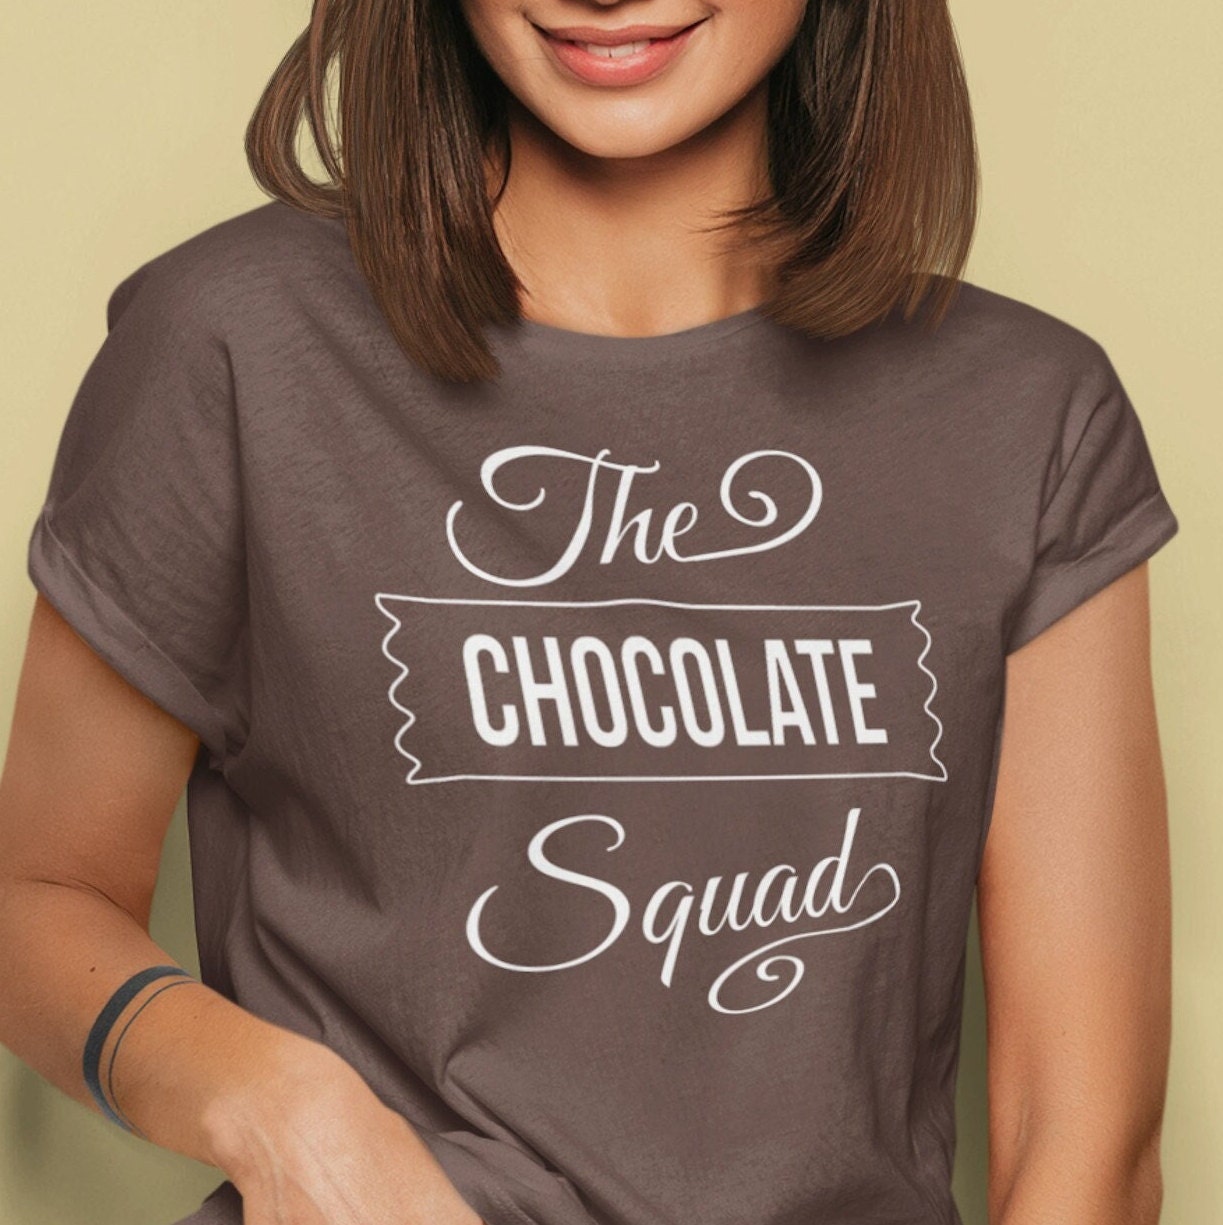 Japanese Chocolate Milk T-Shirt, Cute Chocolate Milk Shirt, Chocolate Lover Gifts, Gifts for Boyfriend, Cute Chocolate Shirt